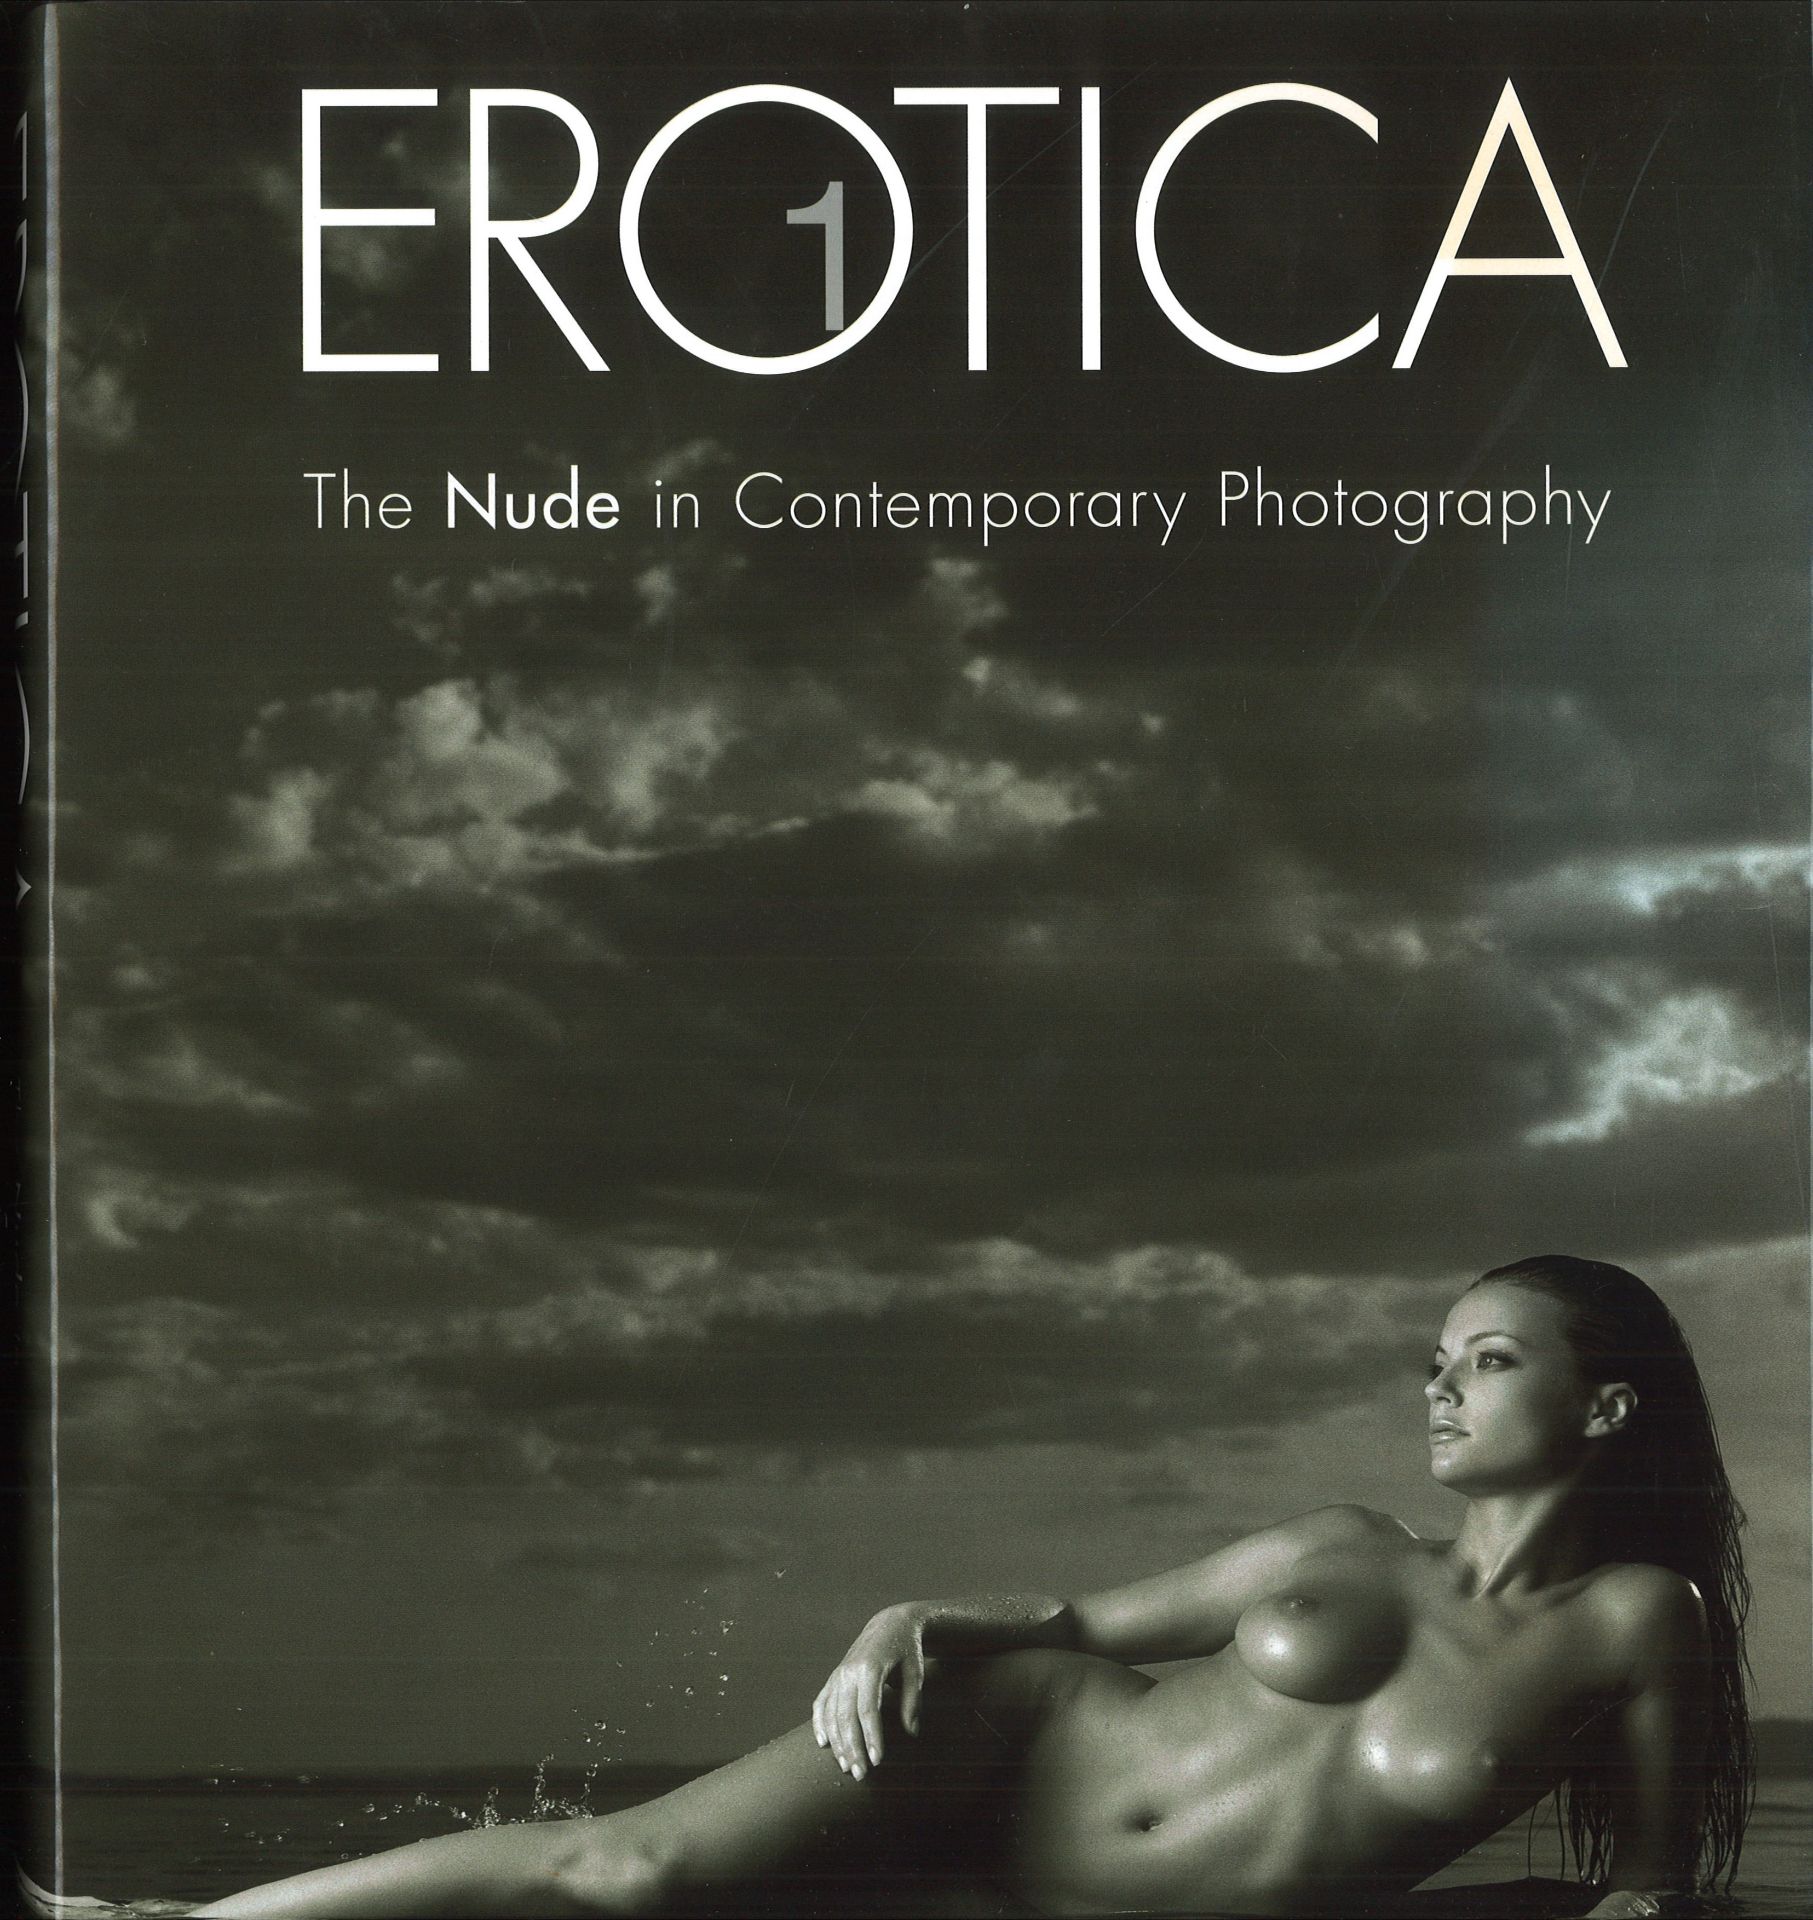 Erotica 1. "The Nude in Contemporary Photography". Verlag: art photo akt edition, 2014. Designed